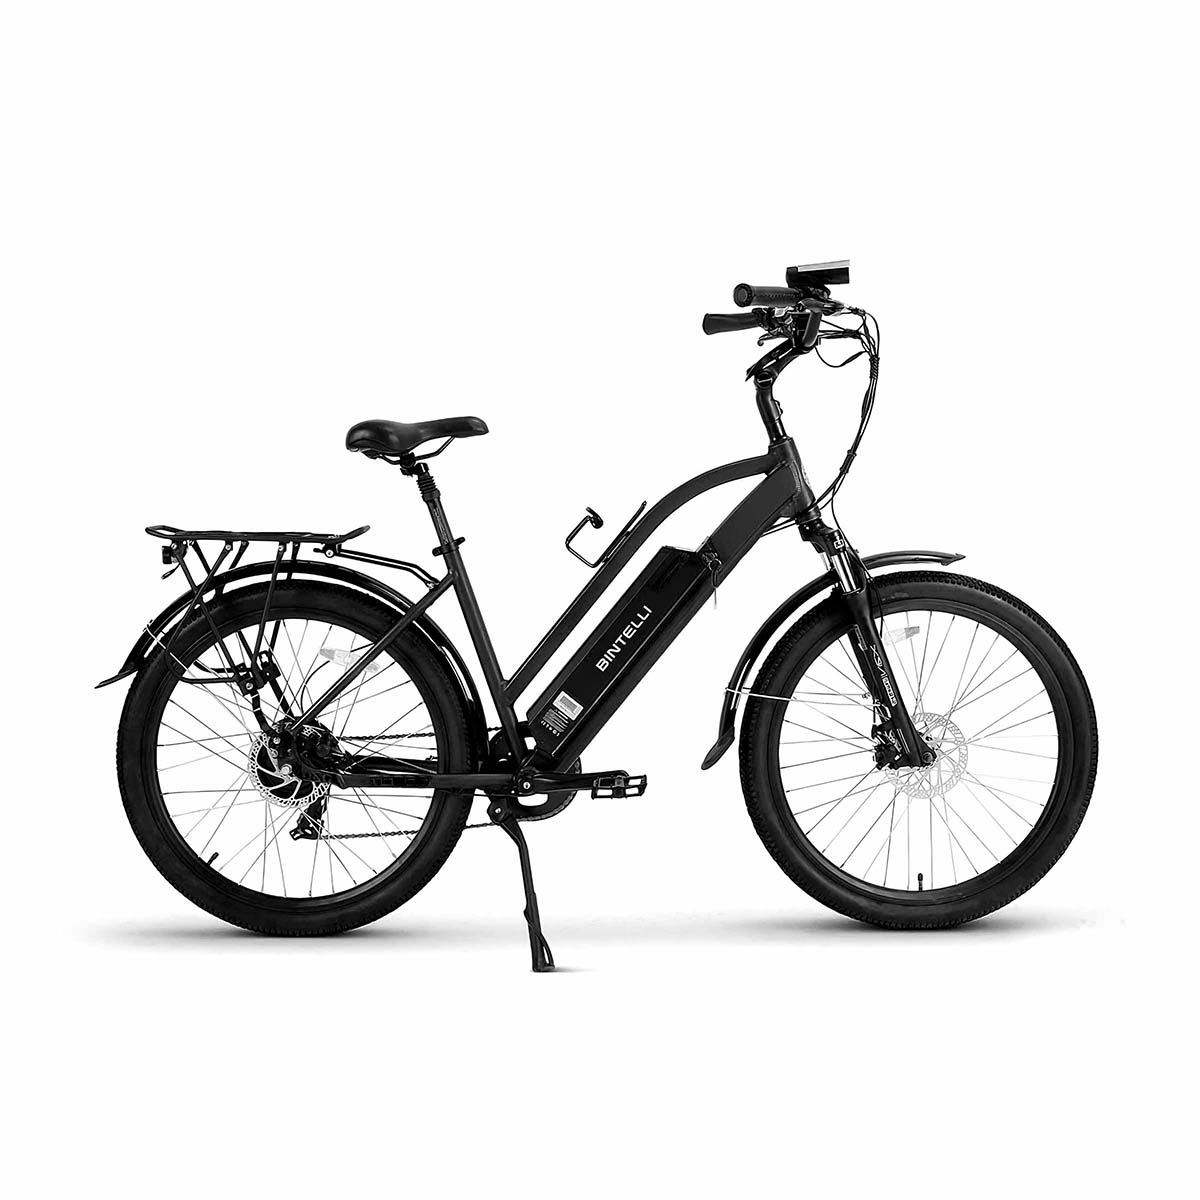 Bintelli Trend Electric Commuter Bike in Color Black